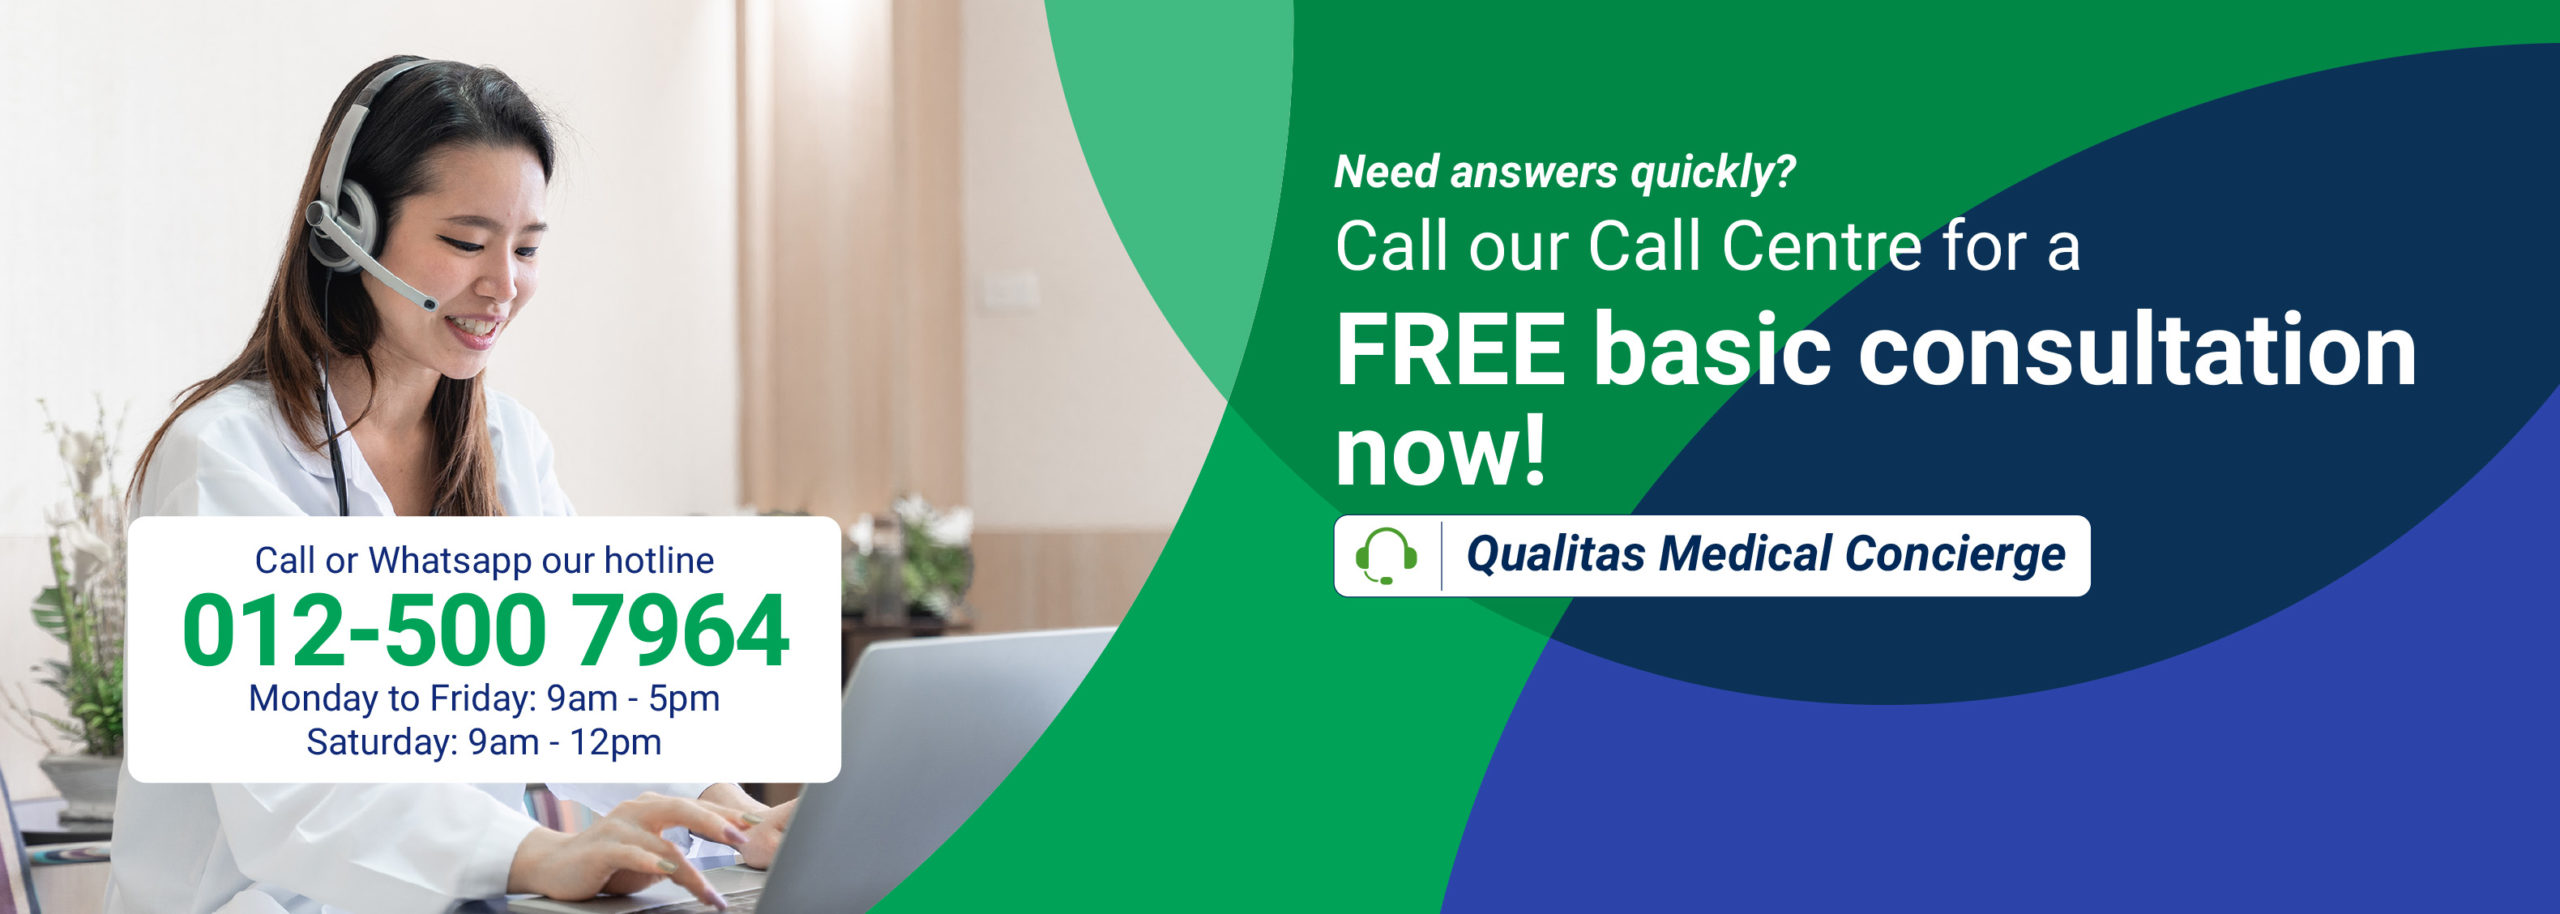 Get free basic consultations through the Qualitas Medical Concierge